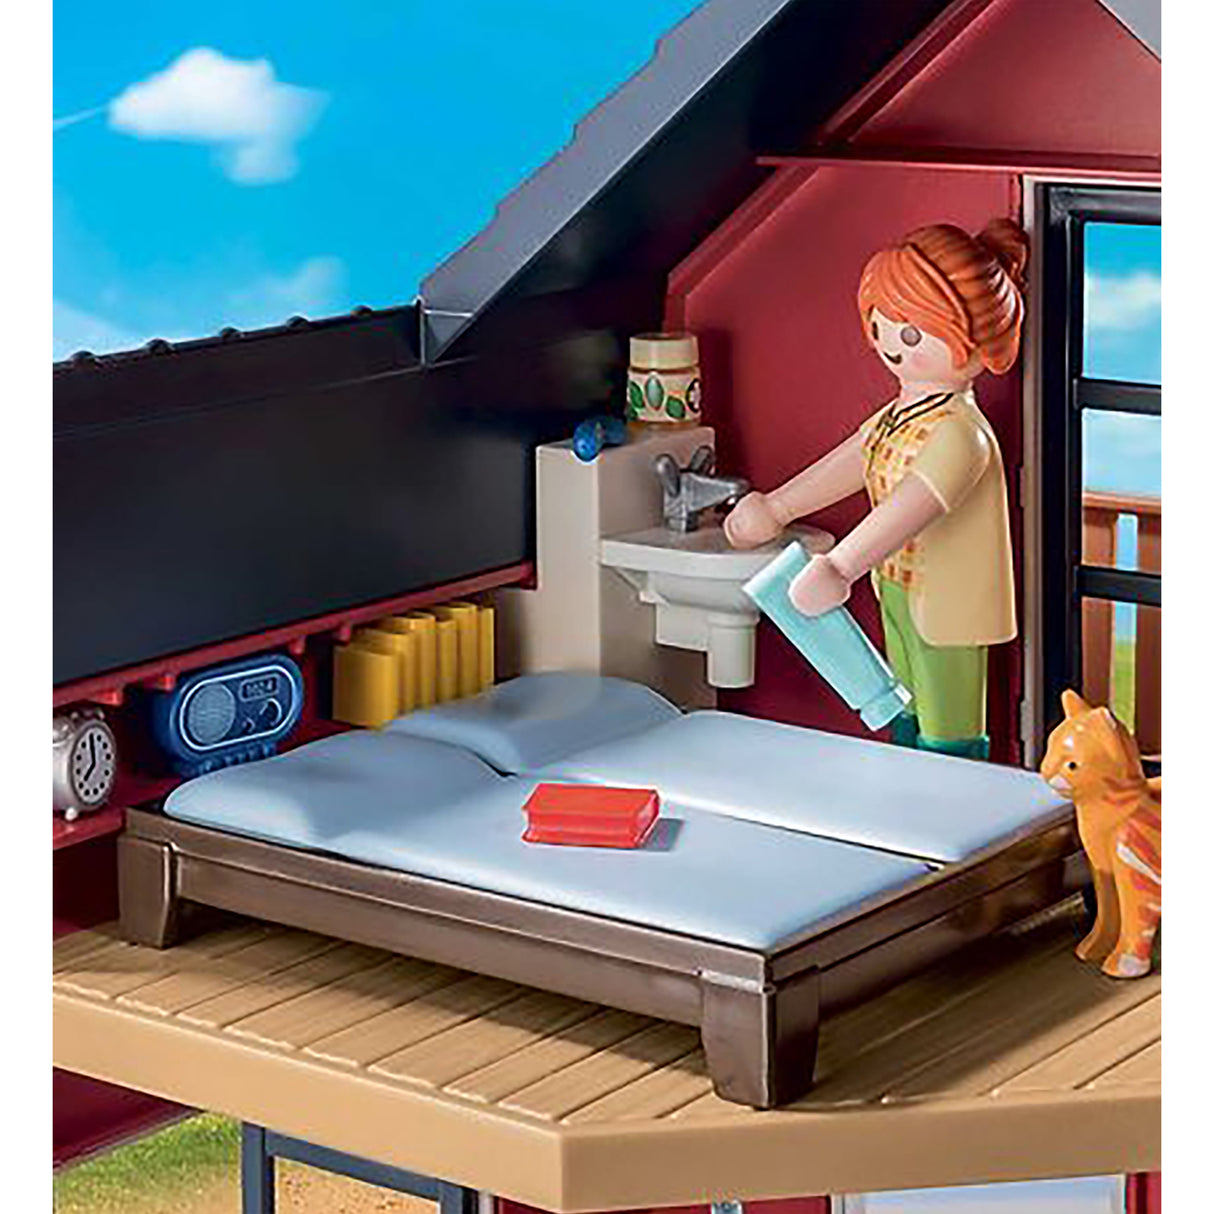 Playmobil Farm House (137 pieces)